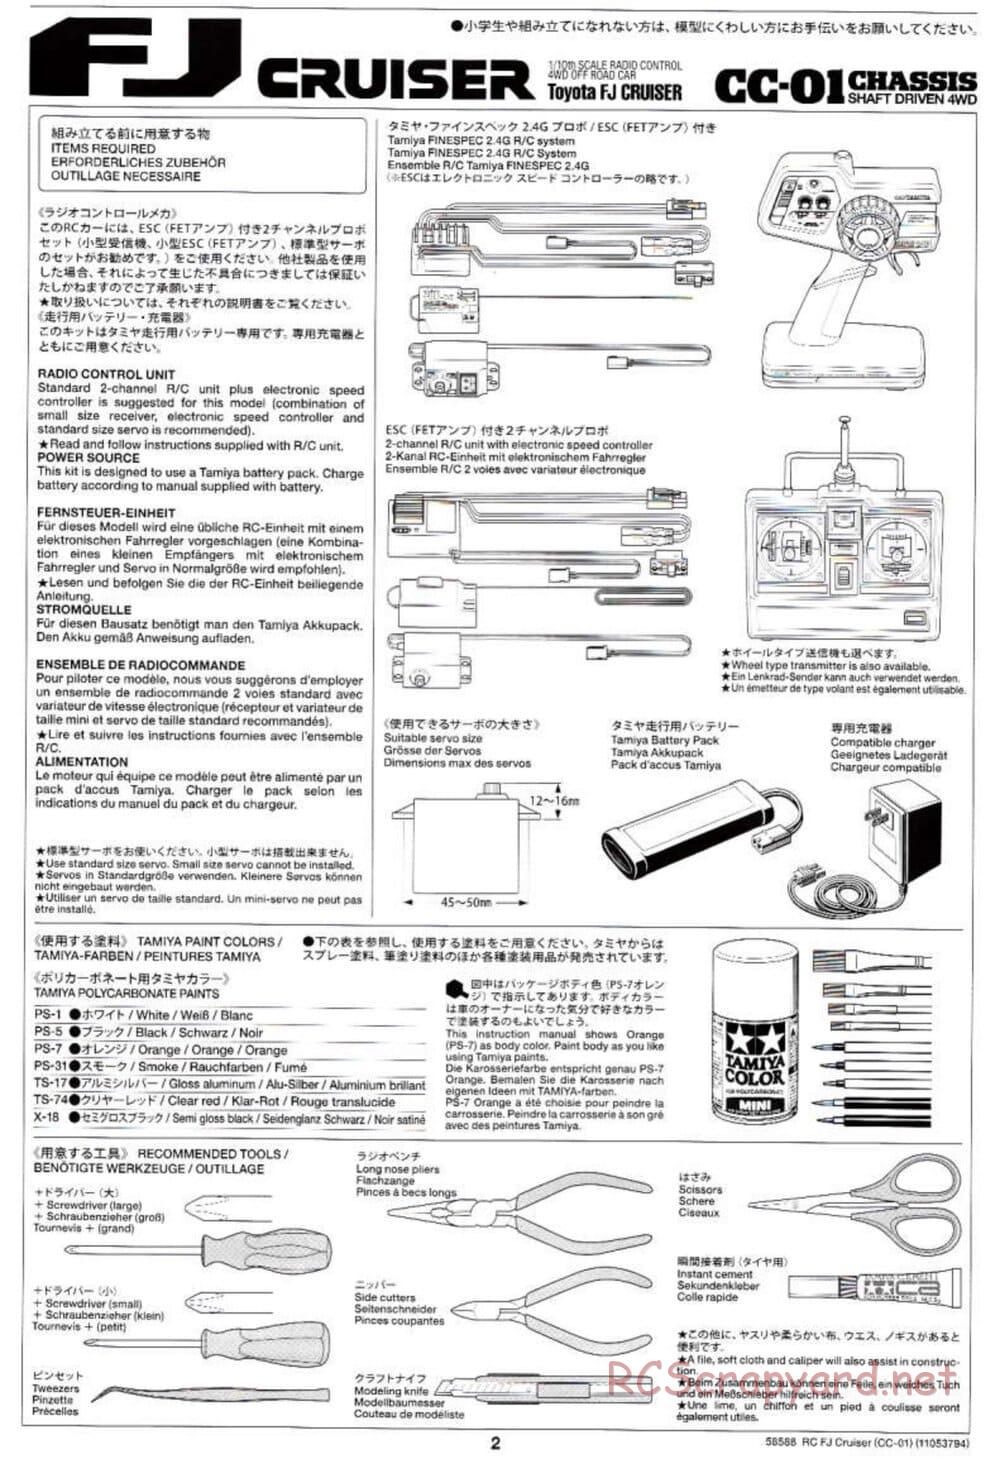 Tamiya - Toyota FJ Cruiser - CC-01 Chassis - Manual - Page 2